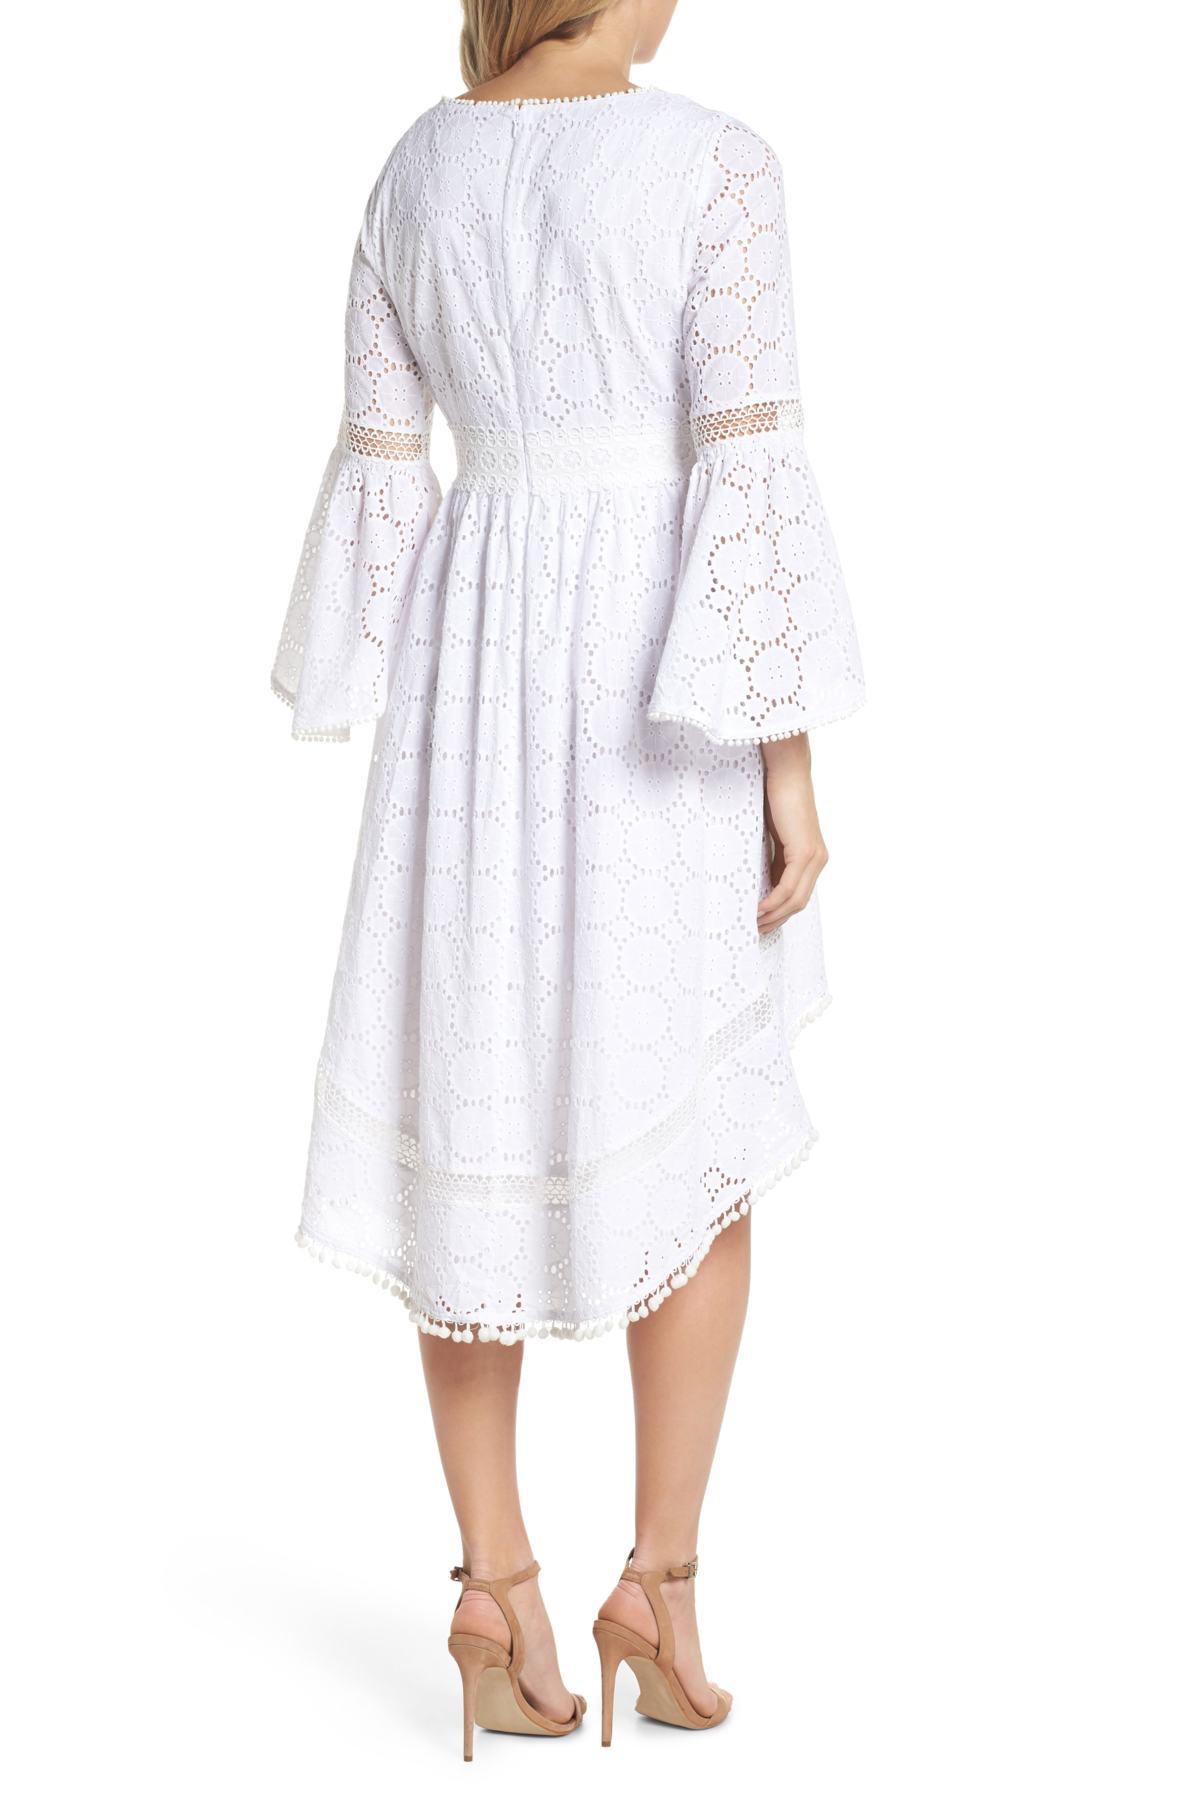 Lyst - Eliza J Bell Sleeve High/low Eyelet Dress (plus Size) in White